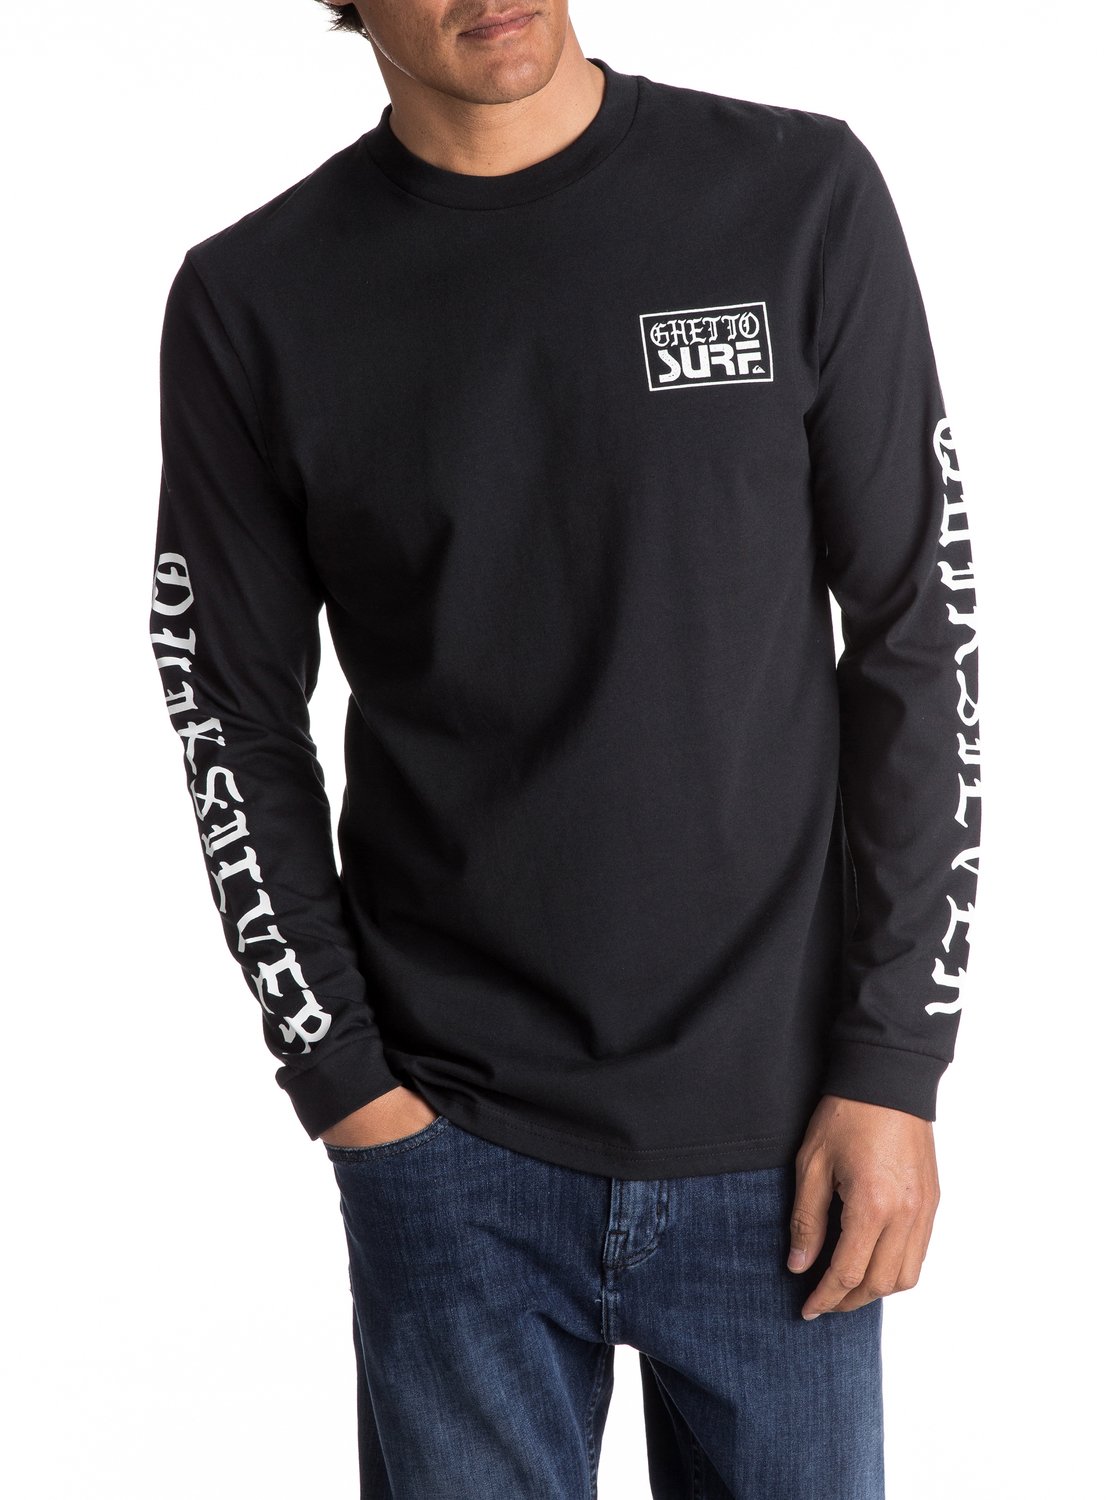 Ghetto Surf - Long Sleeve T-Shirt EQYZT04471 | Quiksilver